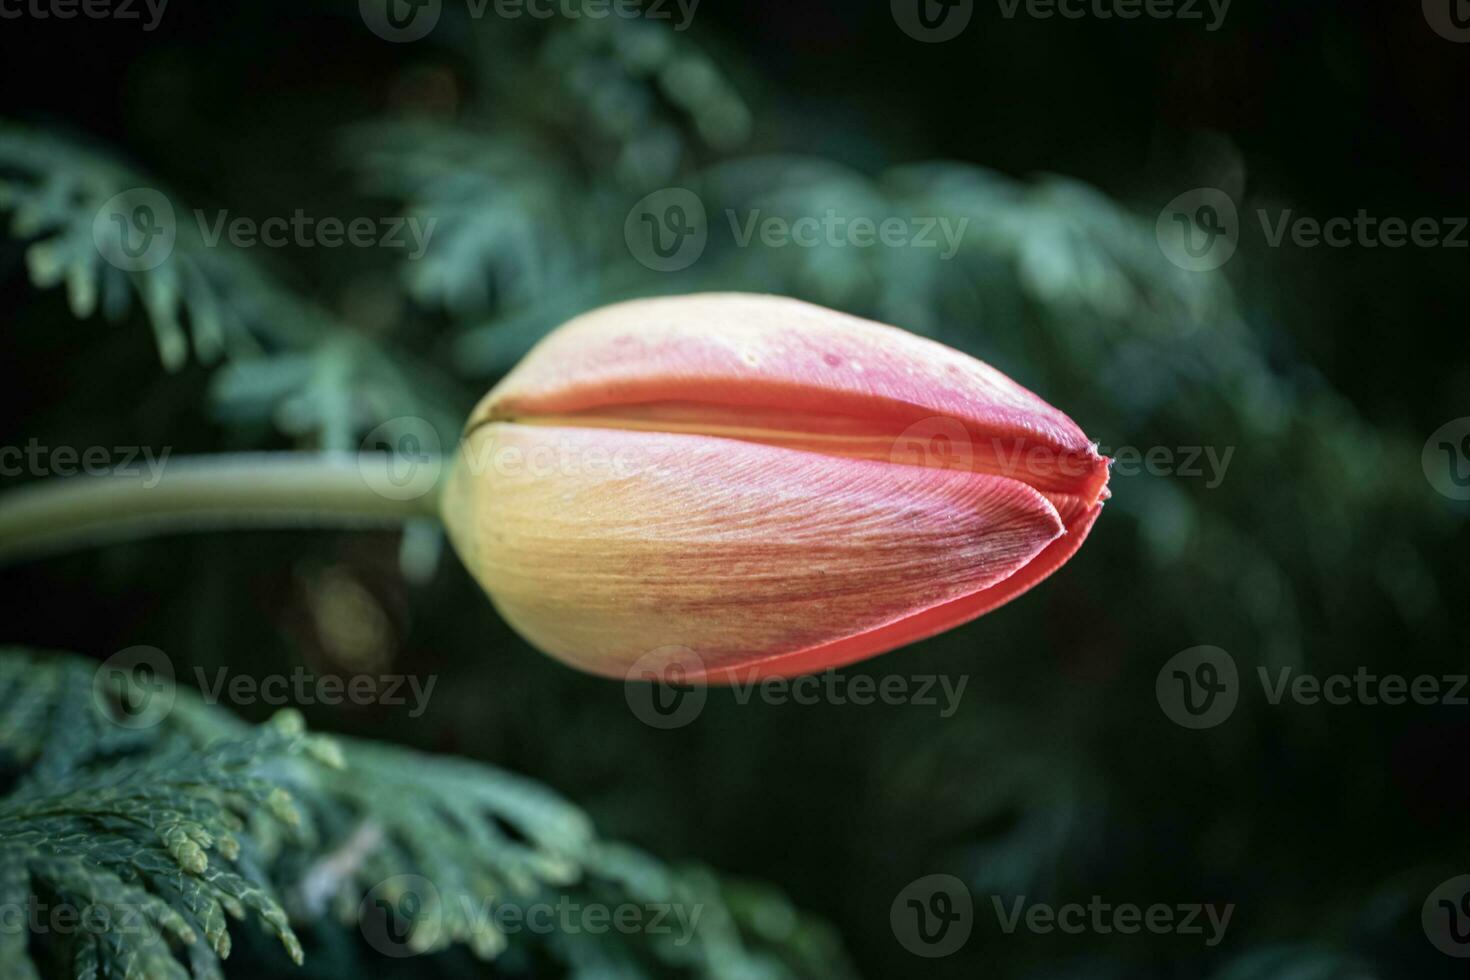 Red closed tulip flower on dark green fir branch bokeh effect photo